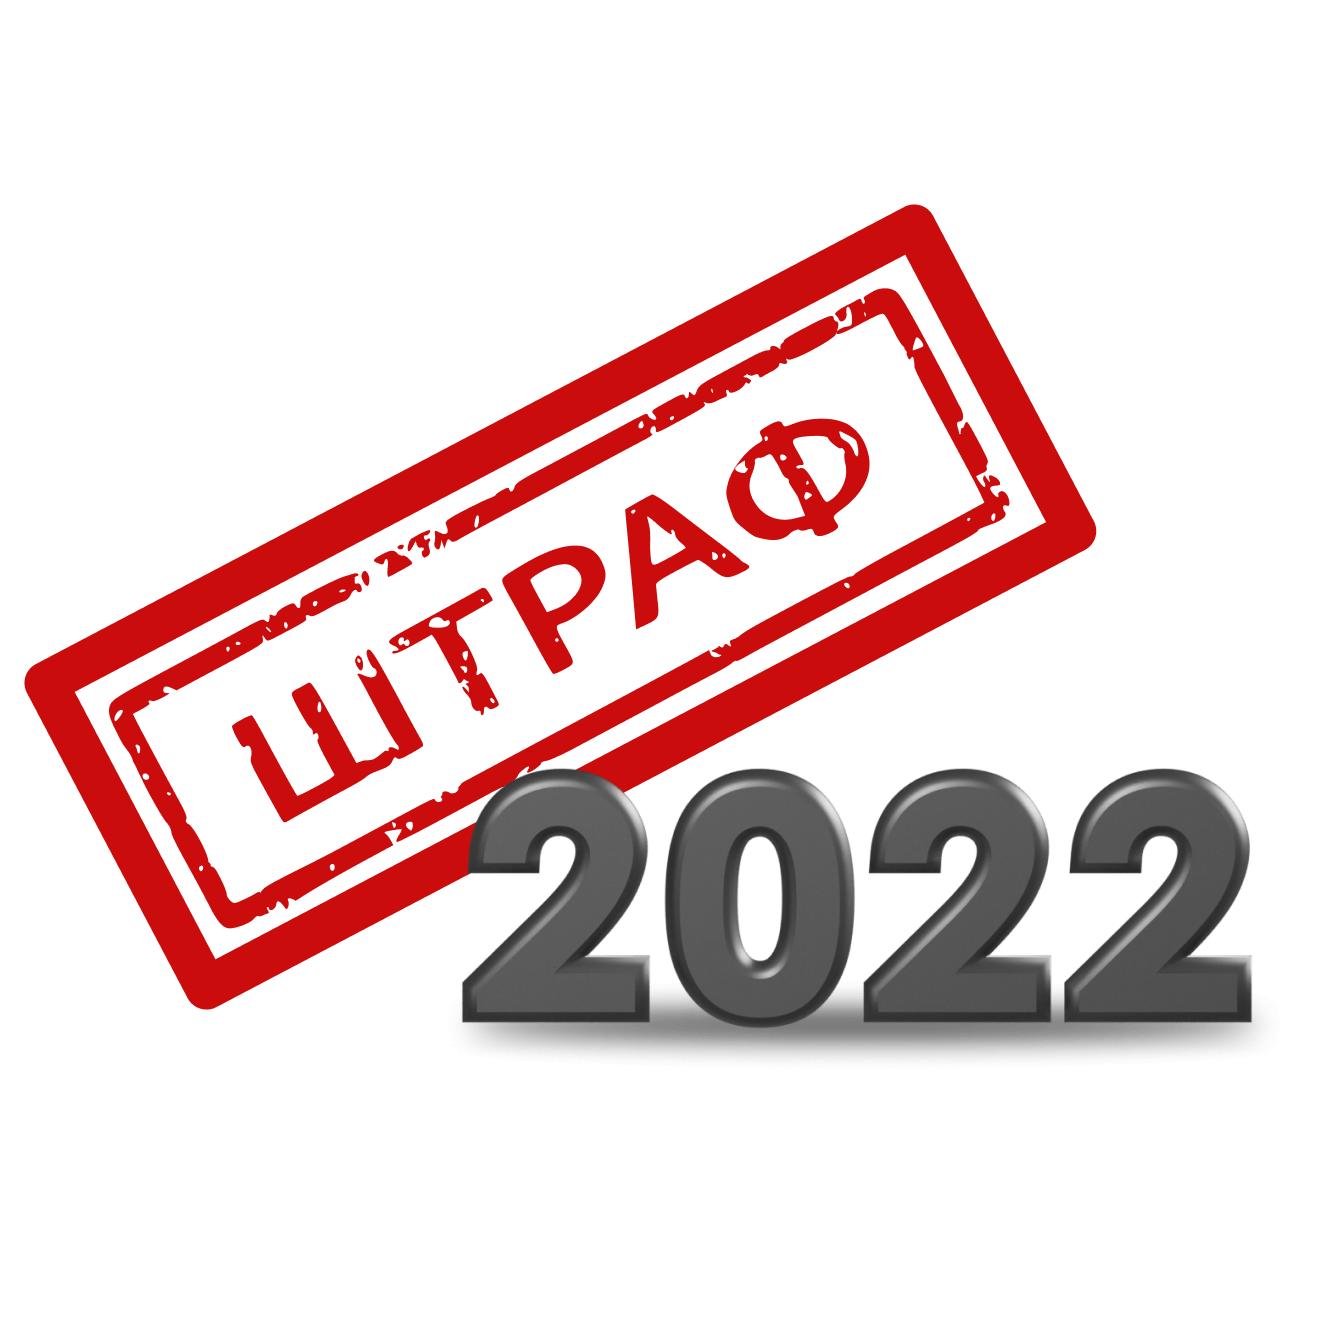 Новые штрафы 2022